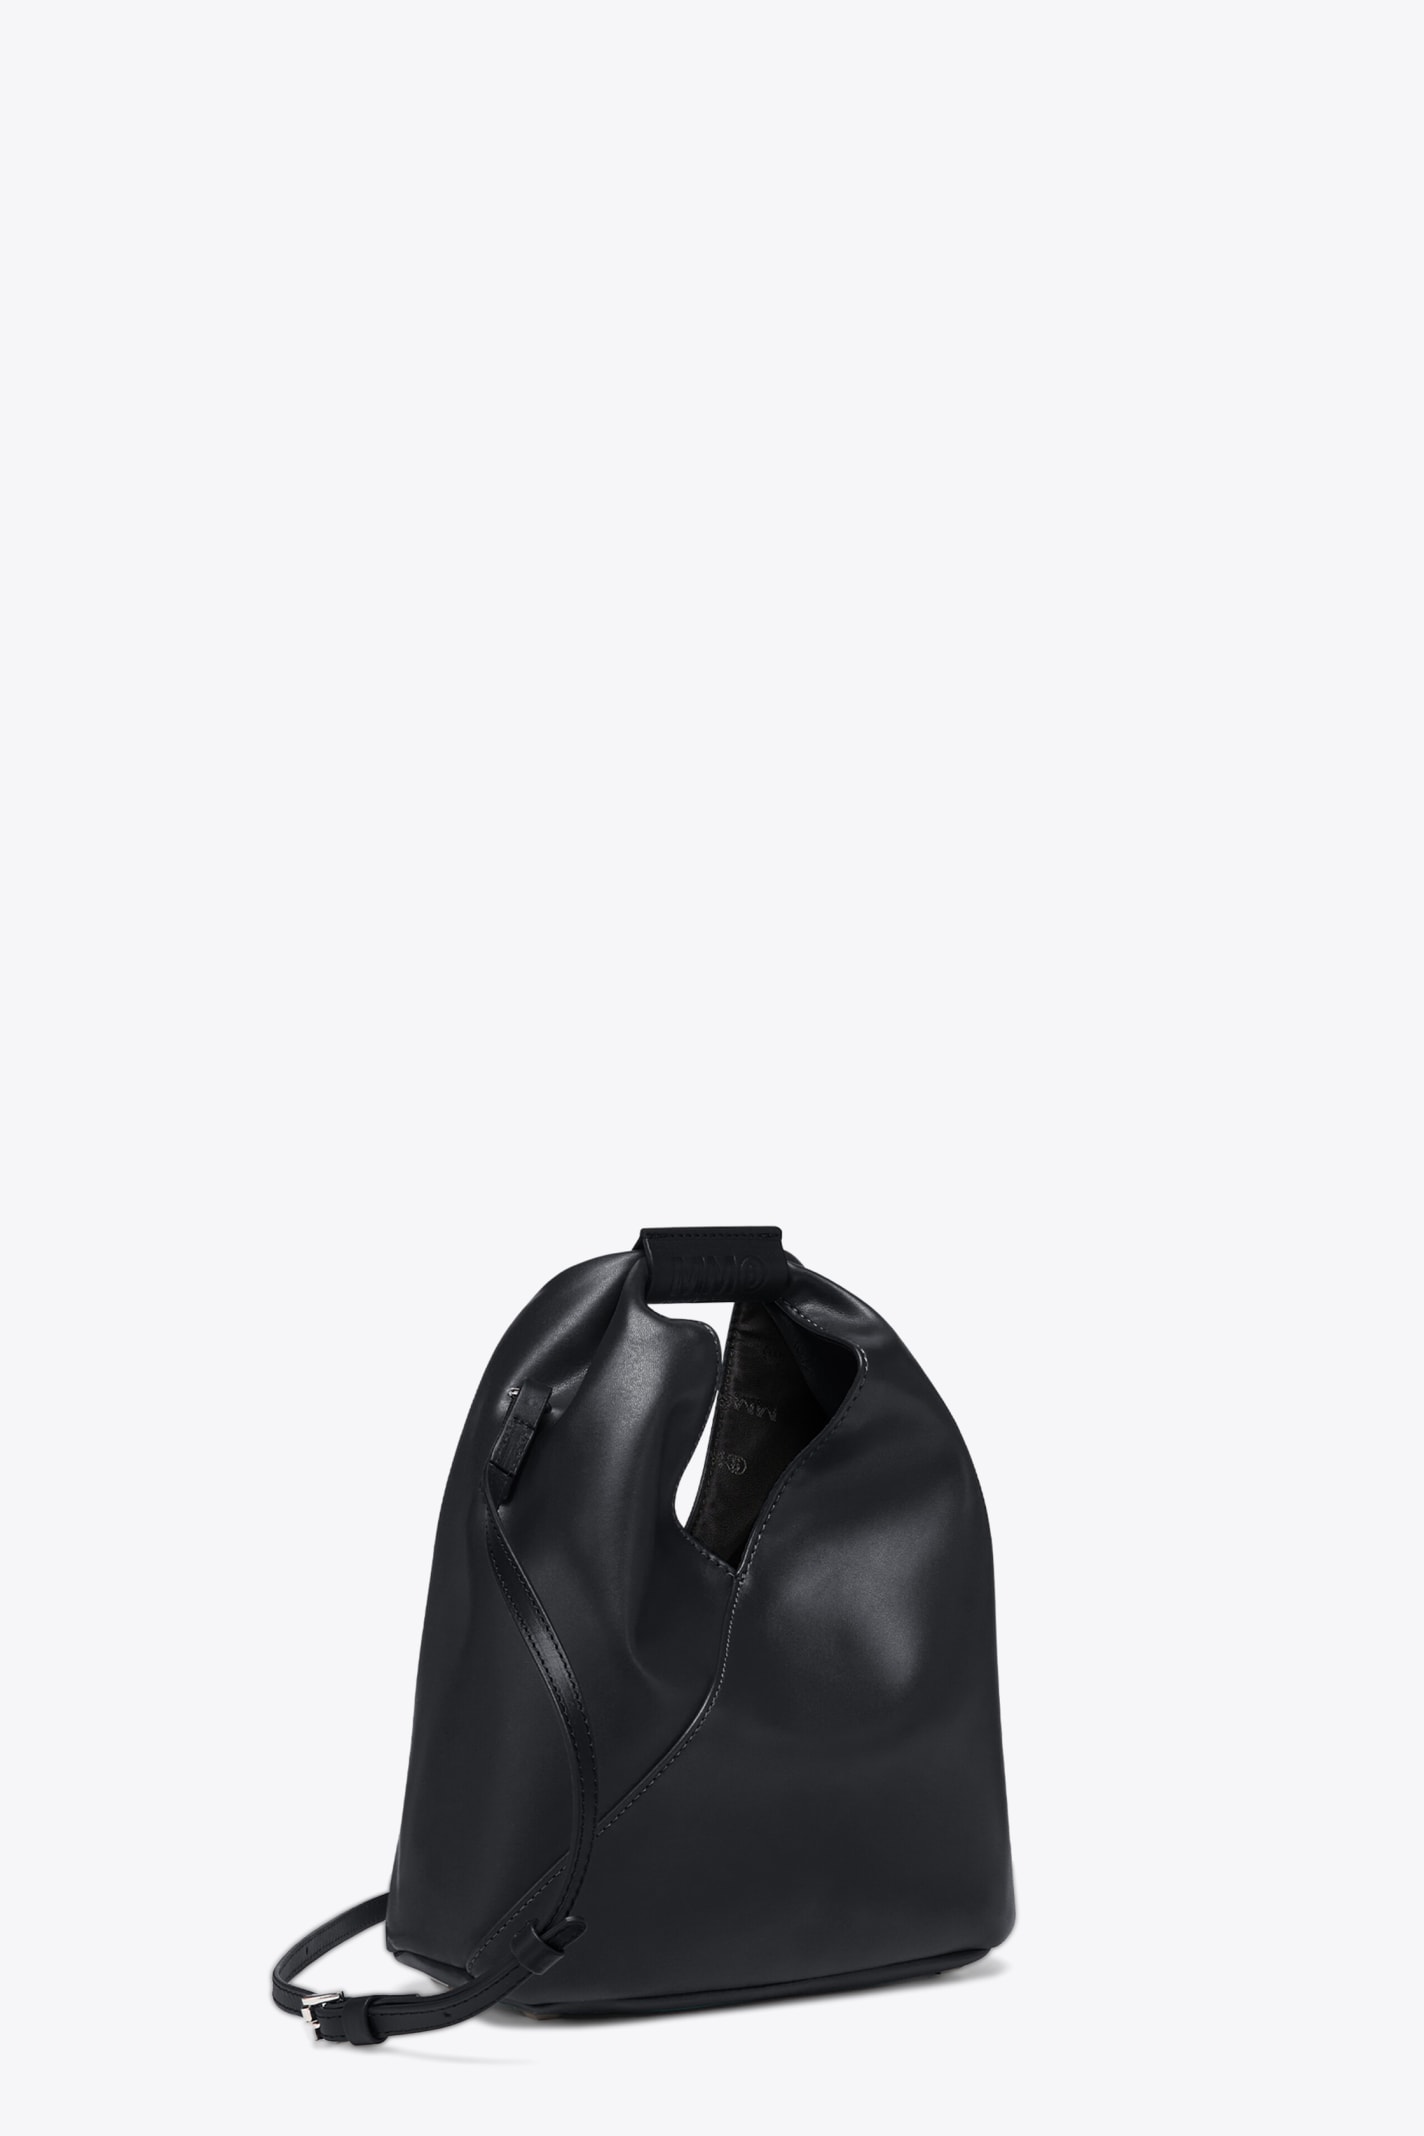 Shop Mm6 Maison Margiela Borsa Mano Black Syntethic Leather Japanese Bag With Shoulder Strap In Nero